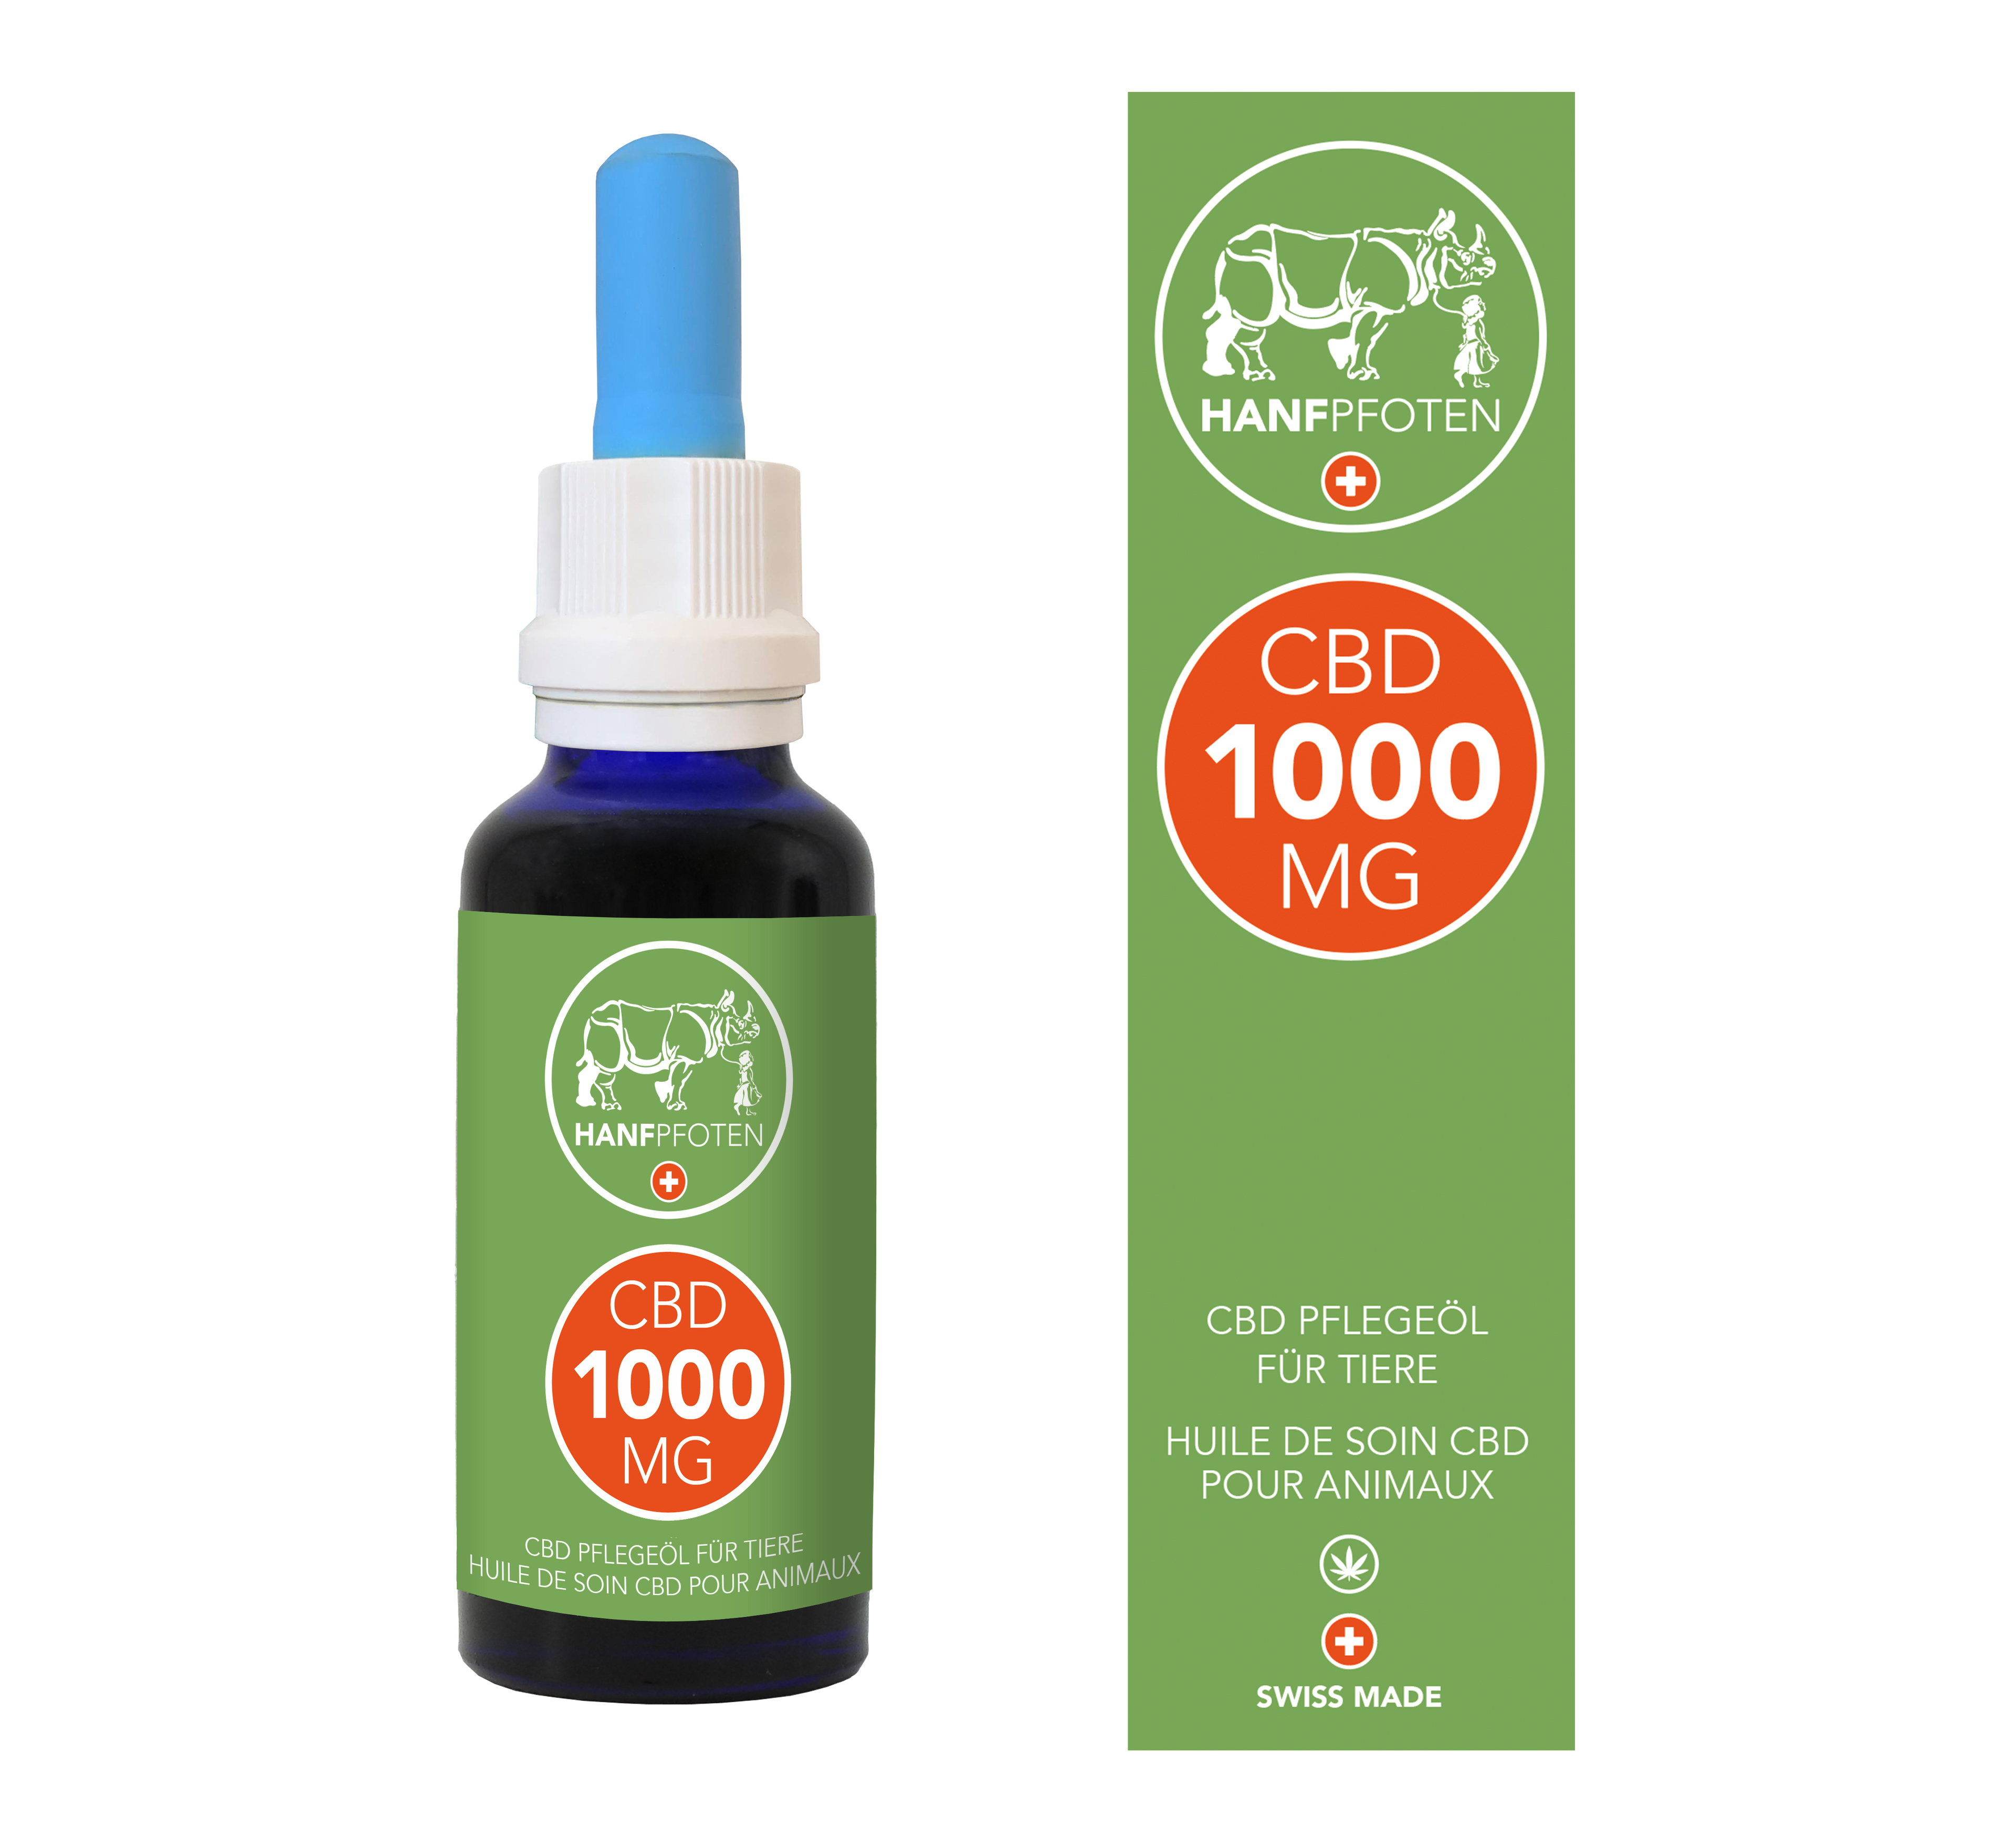 Hanfpfoten 1000 CBD Care oil for Animals 30ml